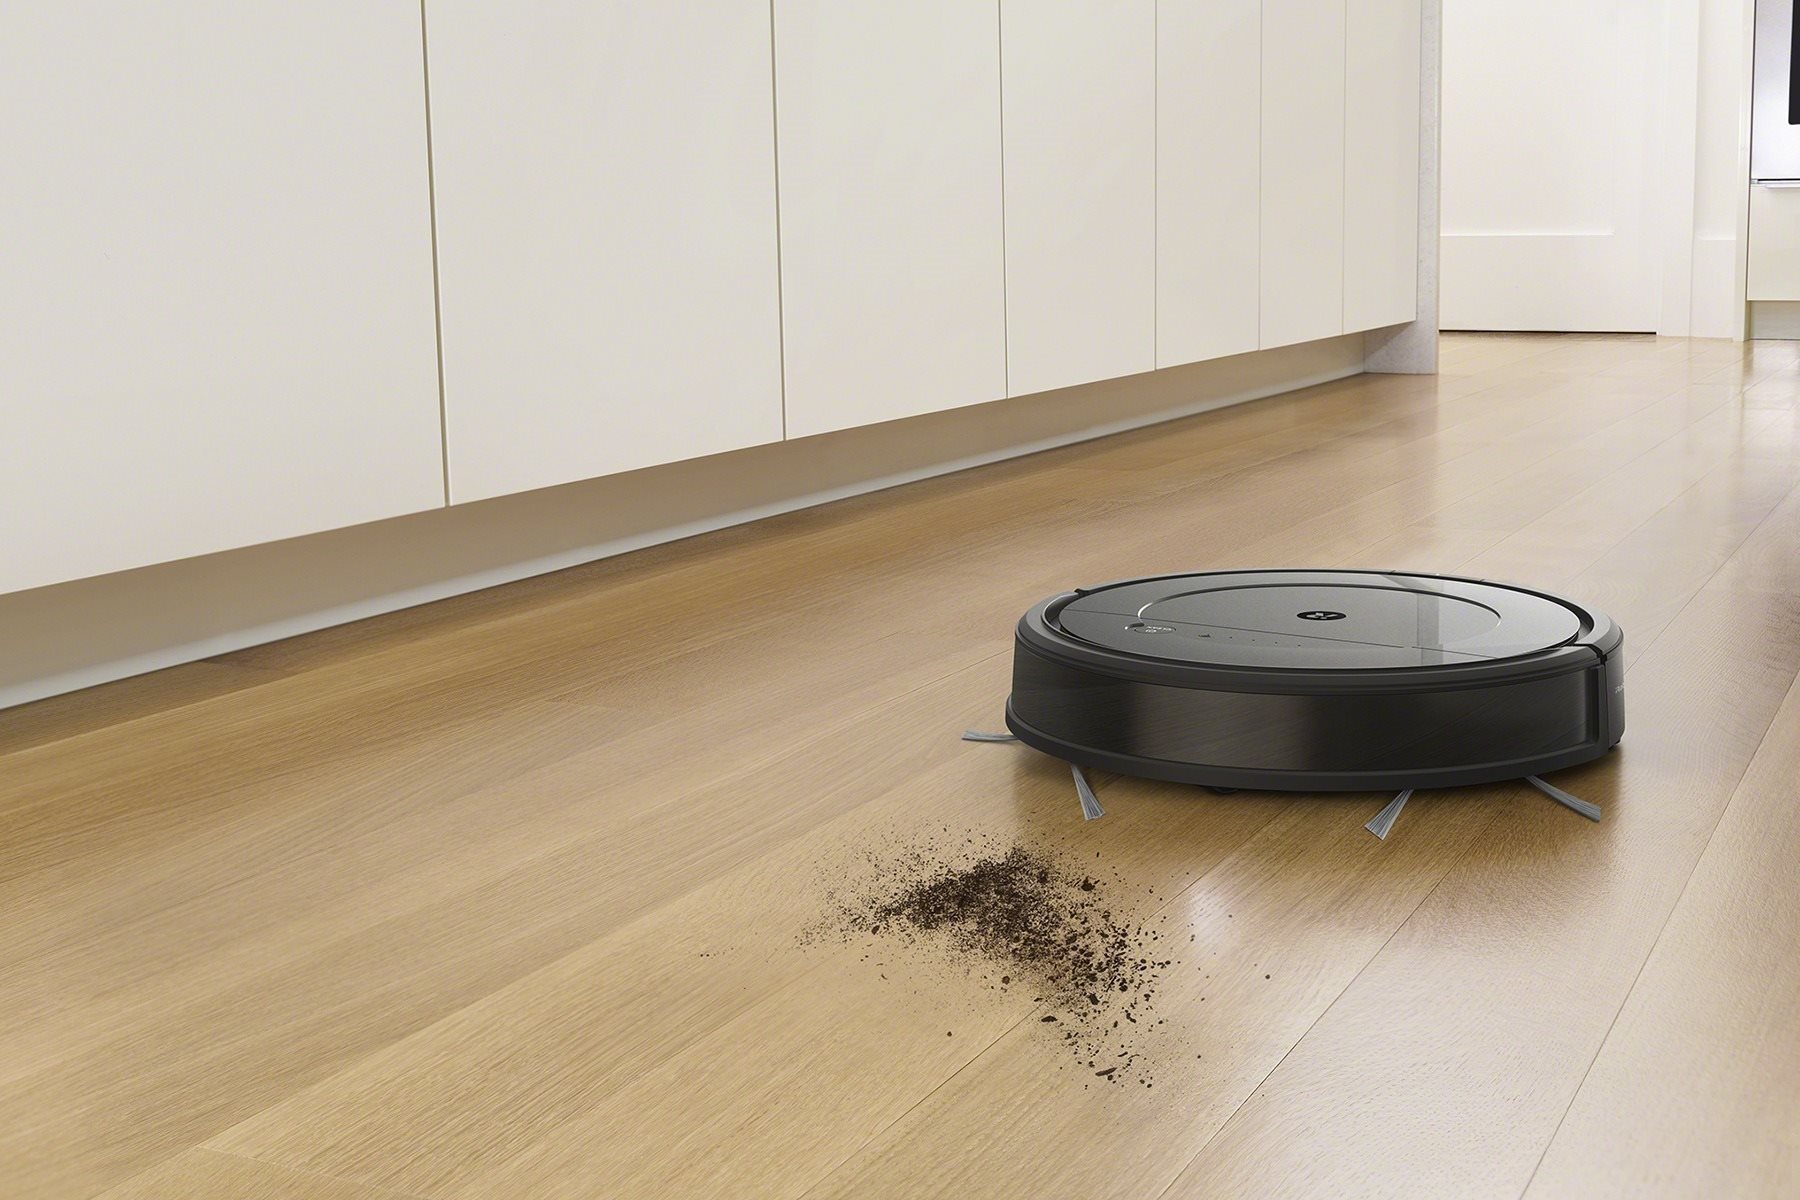 Robot Vacuum Roomba Combo (1138) 2-in-1 Lifestyle